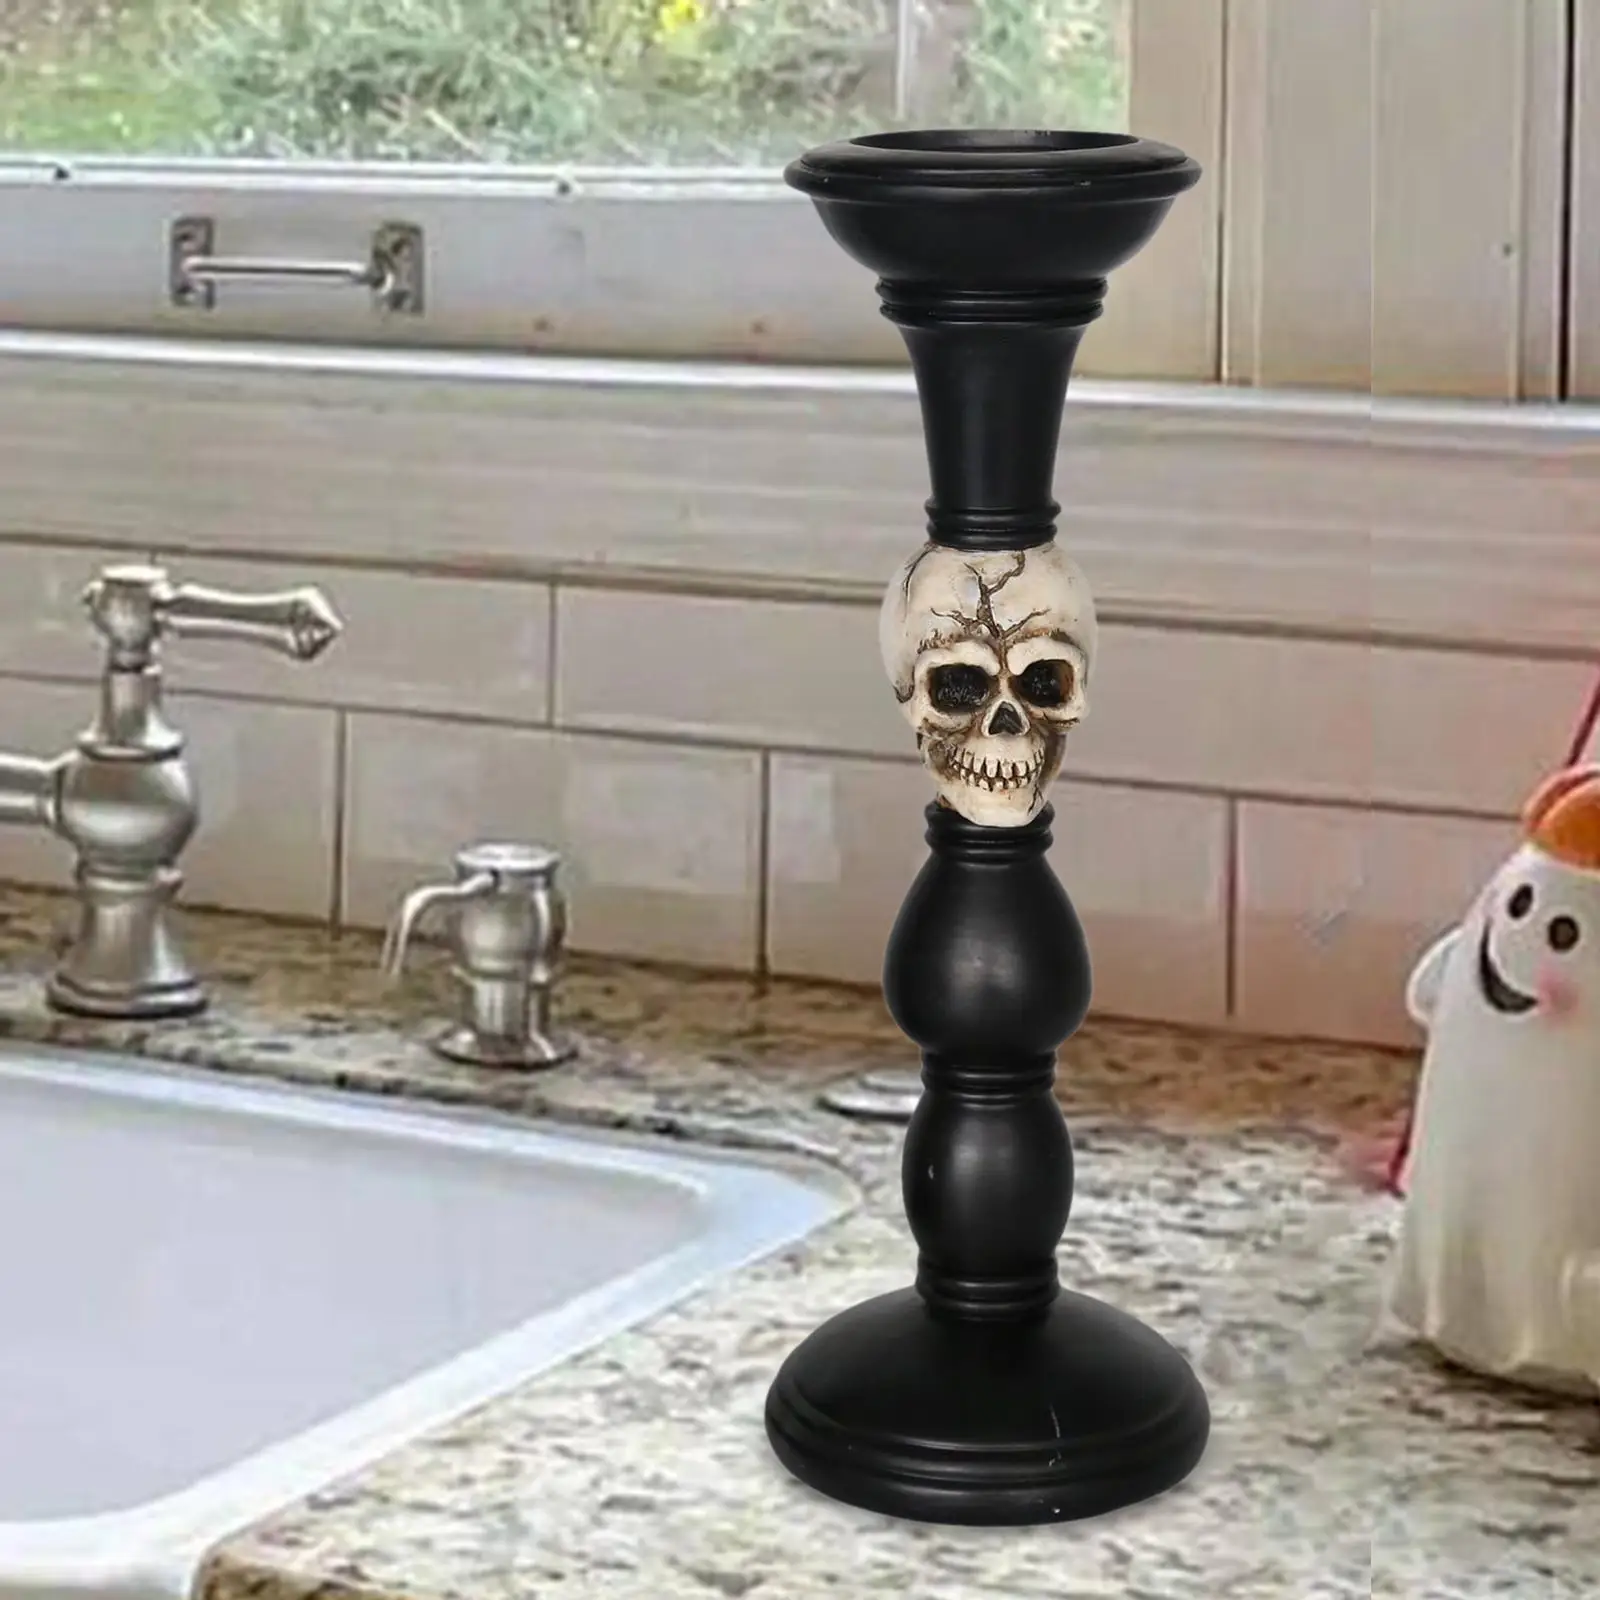 Halloween Skull Candle Holder Resin Candlestick for Halloween Office Bedroom